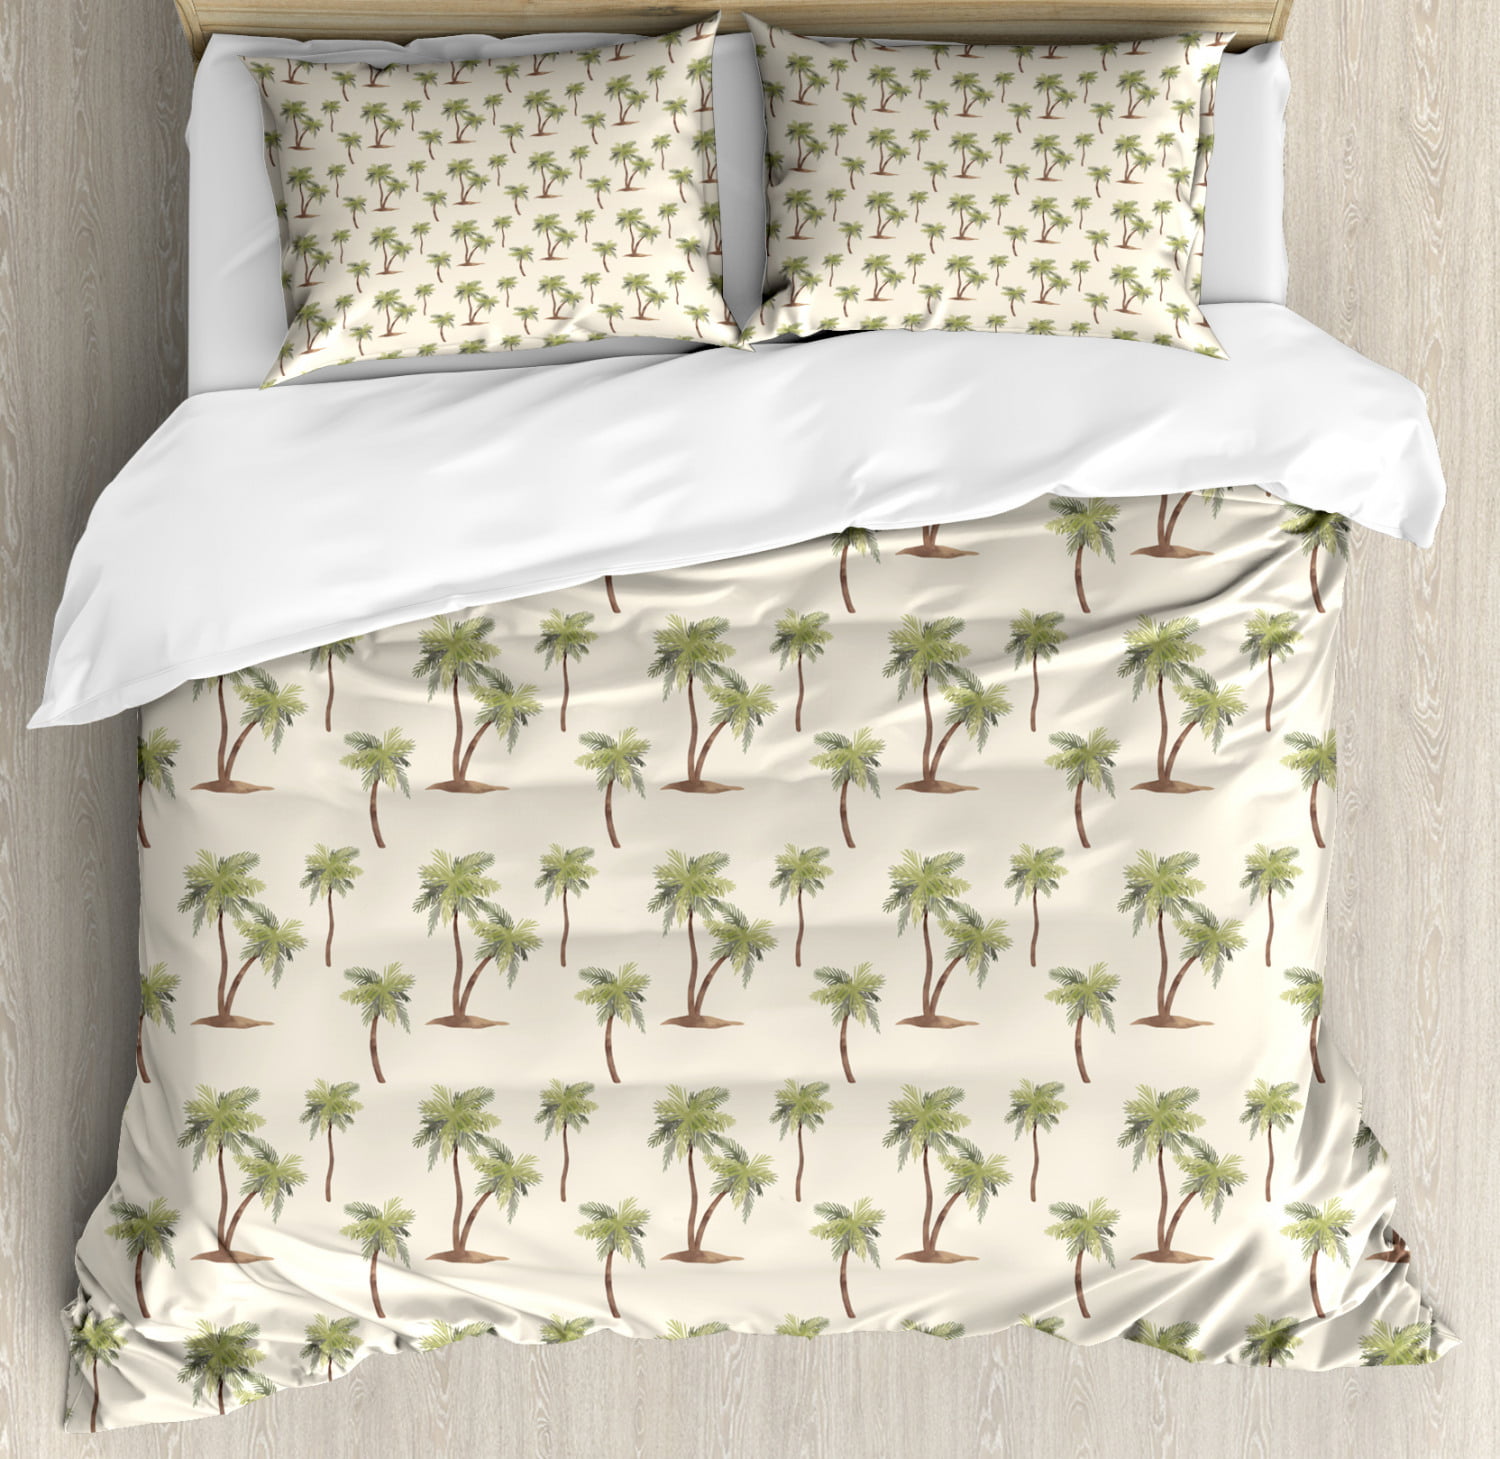 Caribbean Flamingo Zigzag Duvet Cover Quilt Cover Bedding Set with Pillow Case 